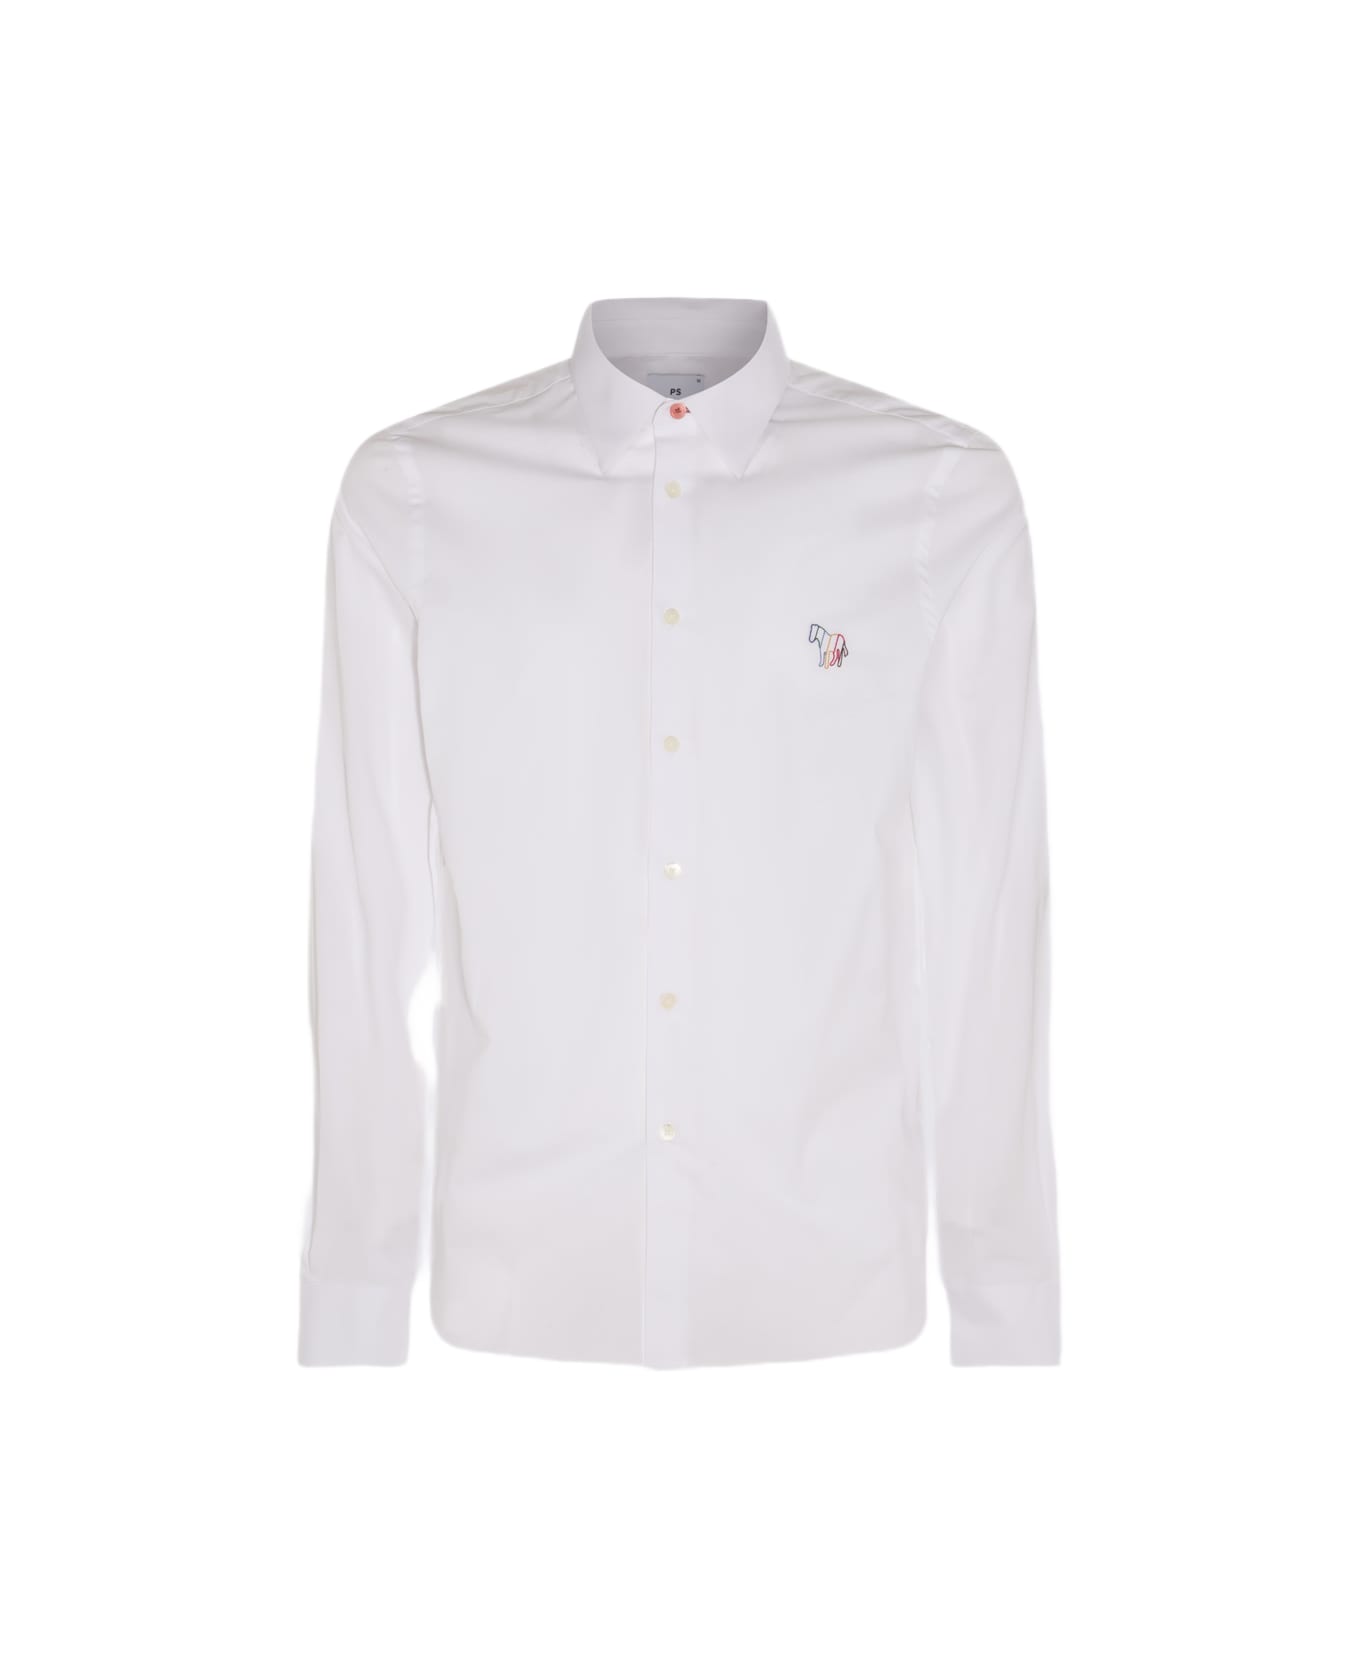 Paul Smith White Cotton Shirt - White シャツ